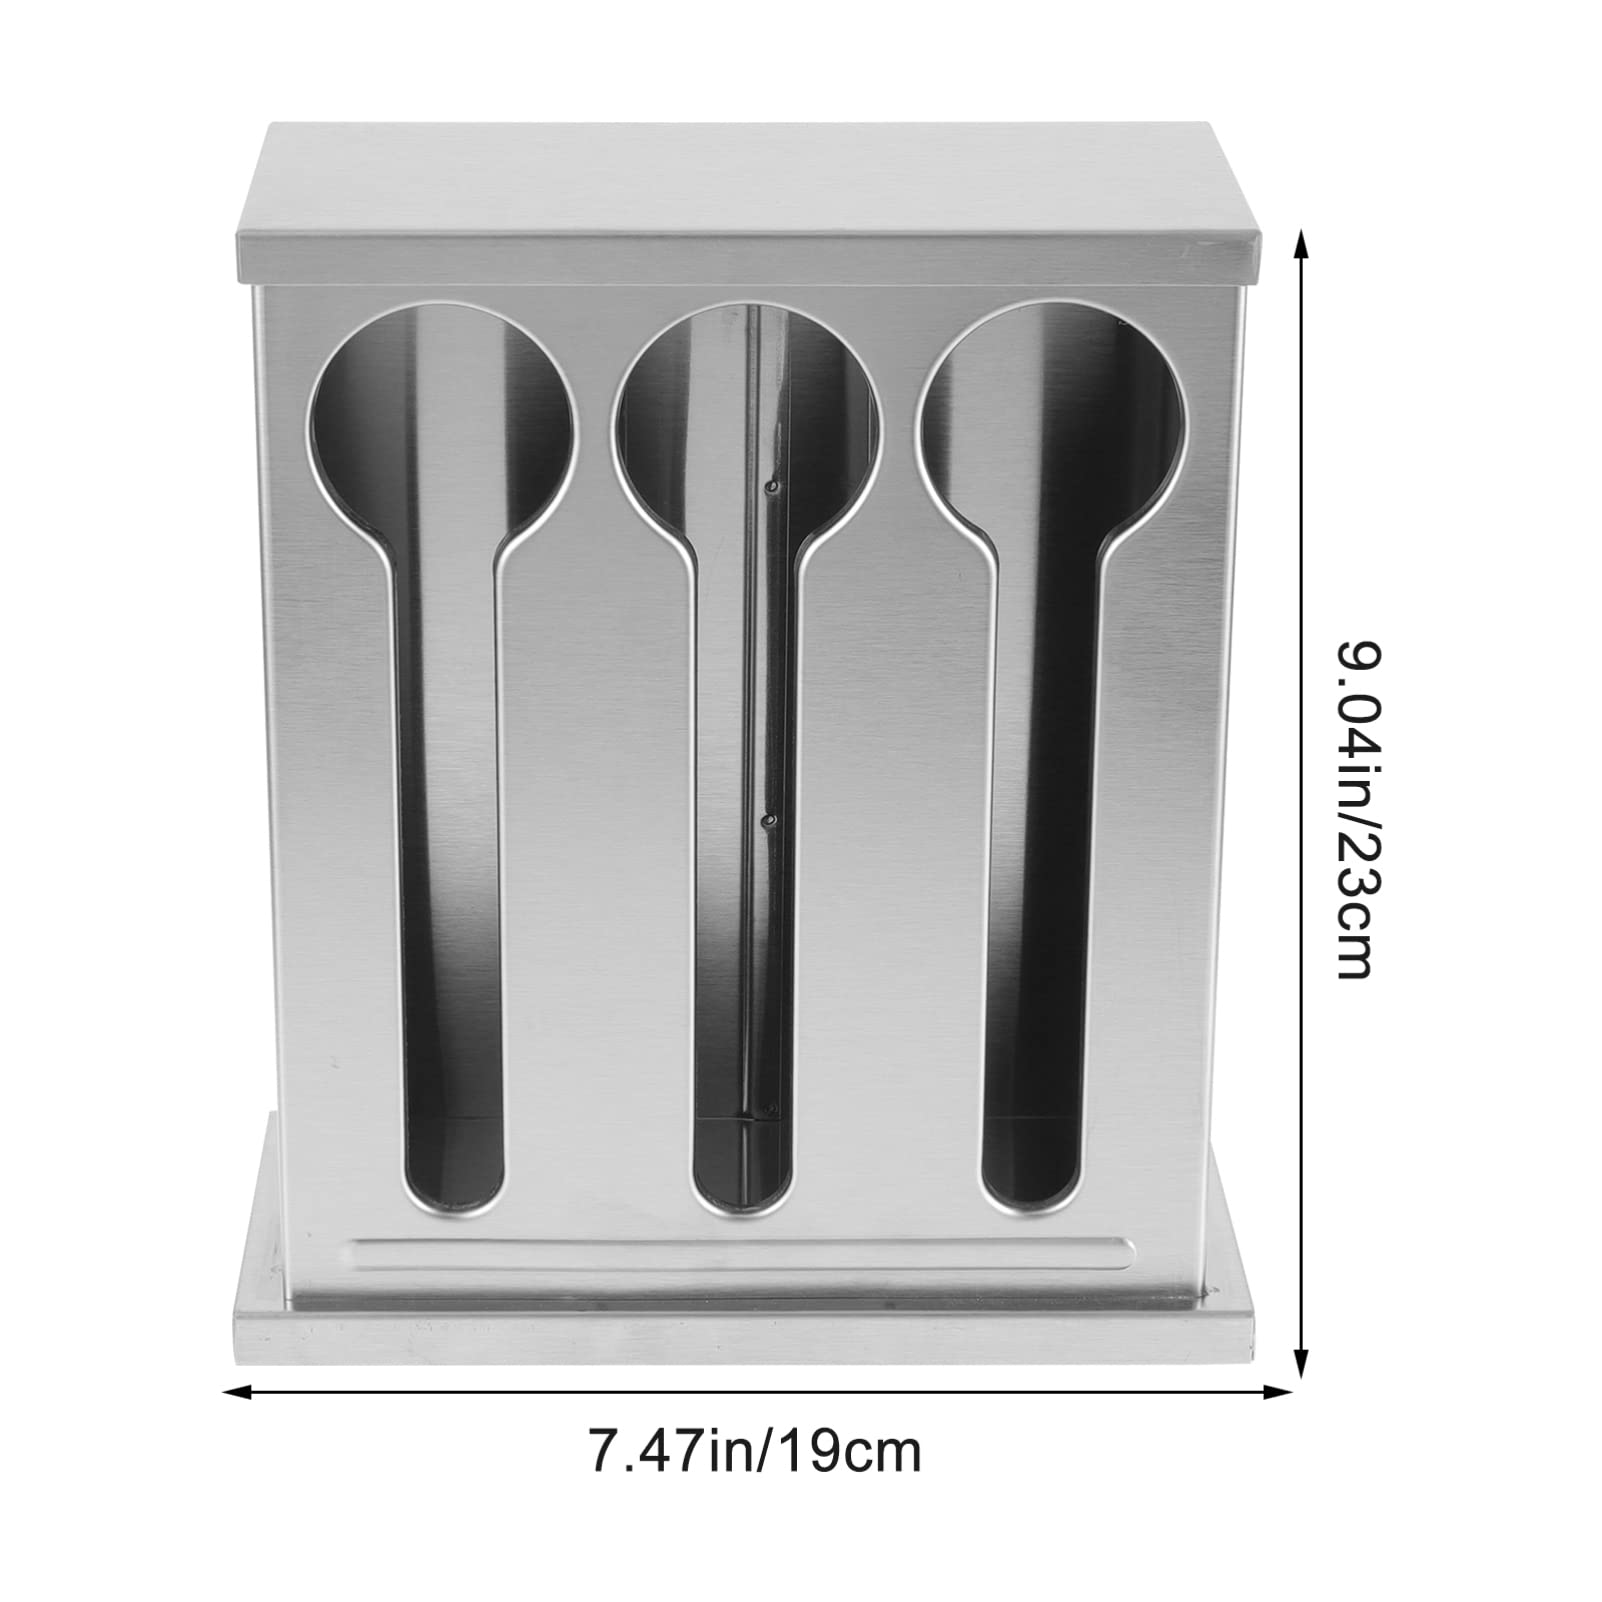 UPKOCH Utensil Dispenser 3 Compartment Stainless Steel Cutlery Organizer Silverware Holder Caddy Forks Spoons Knives Flatware Dispenser for Restaurant Kitchen